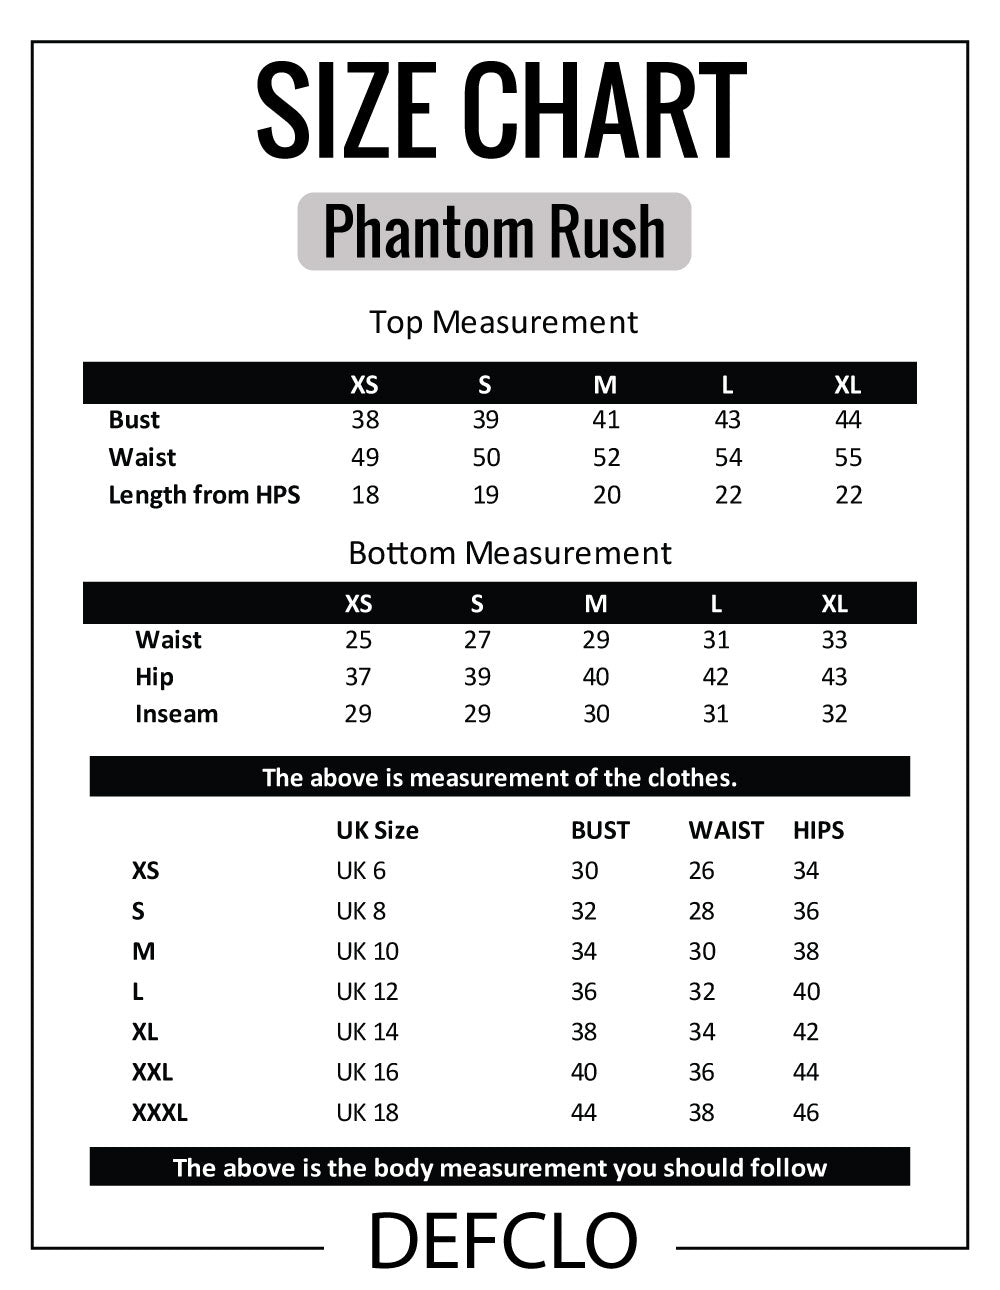 Phantom Rush - Top